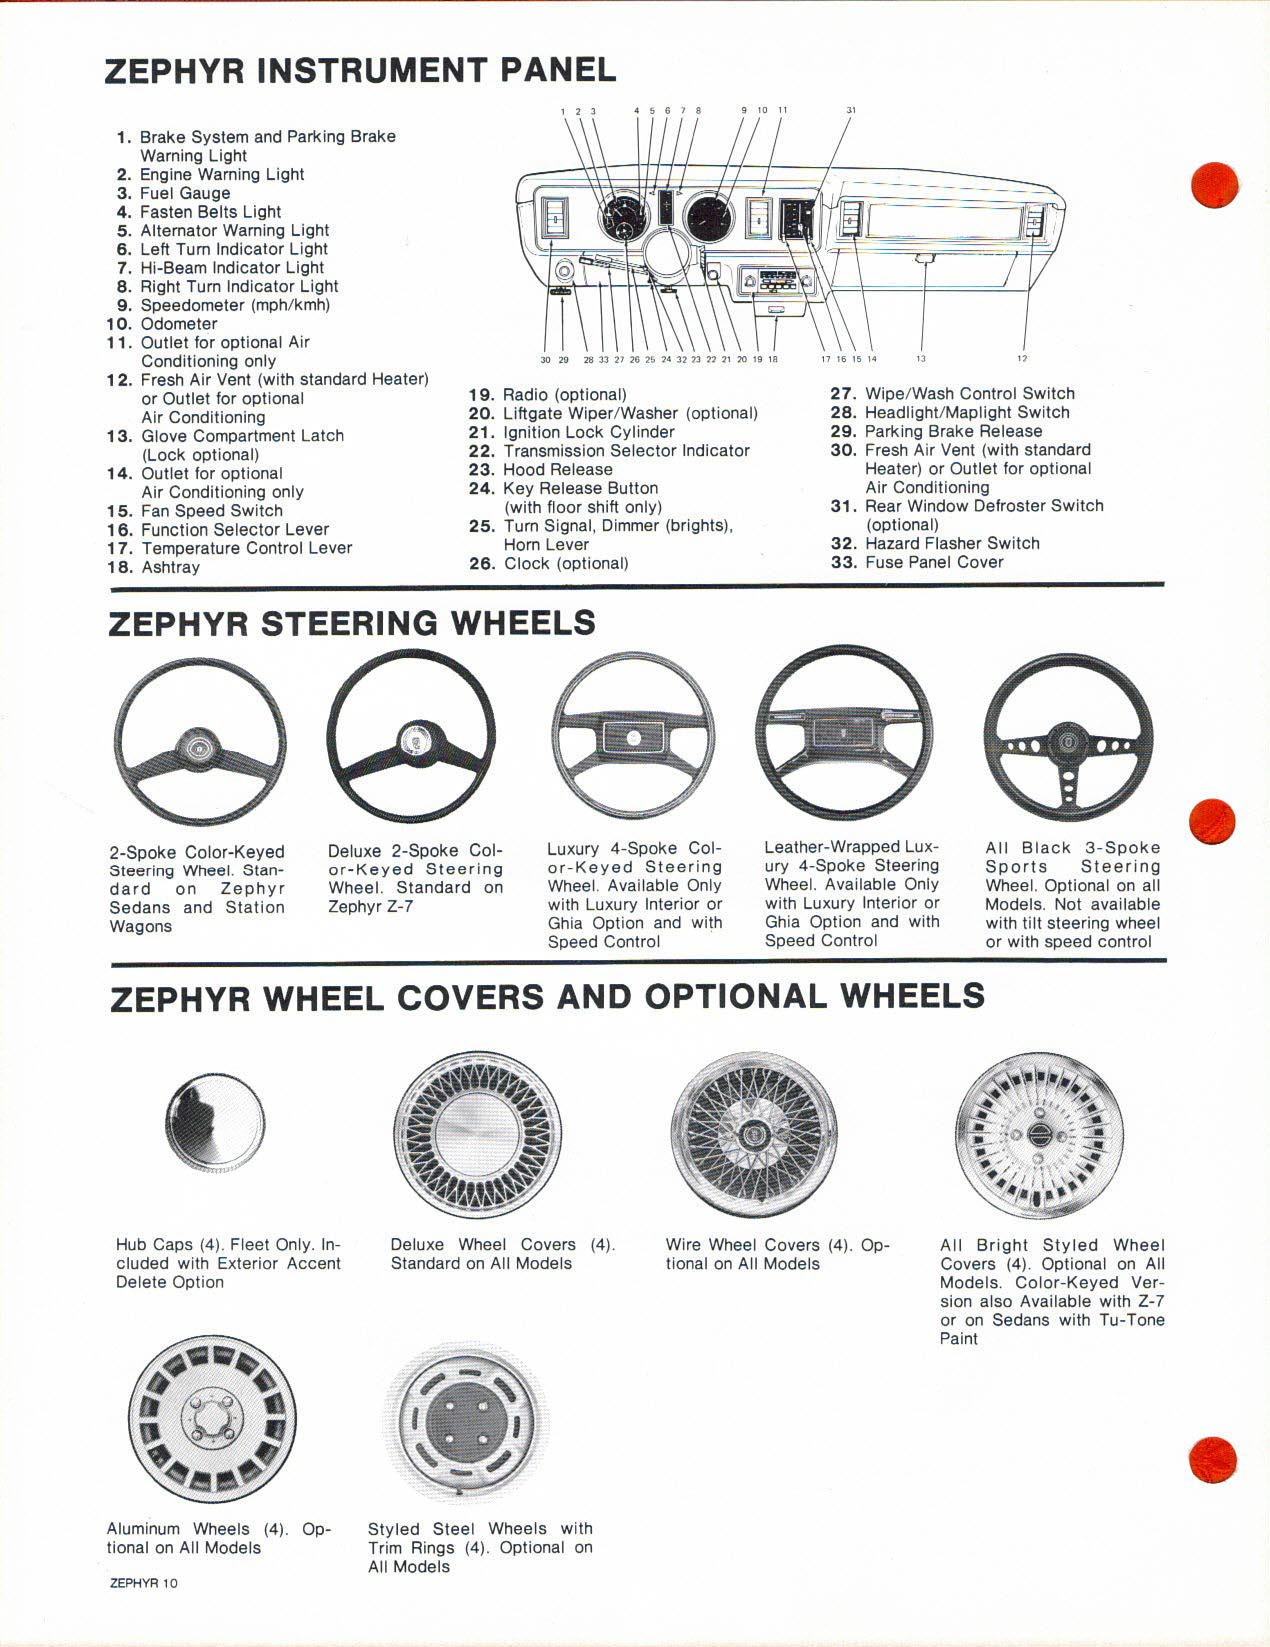 1980 Mercury Zephyr Fact Book Page 22